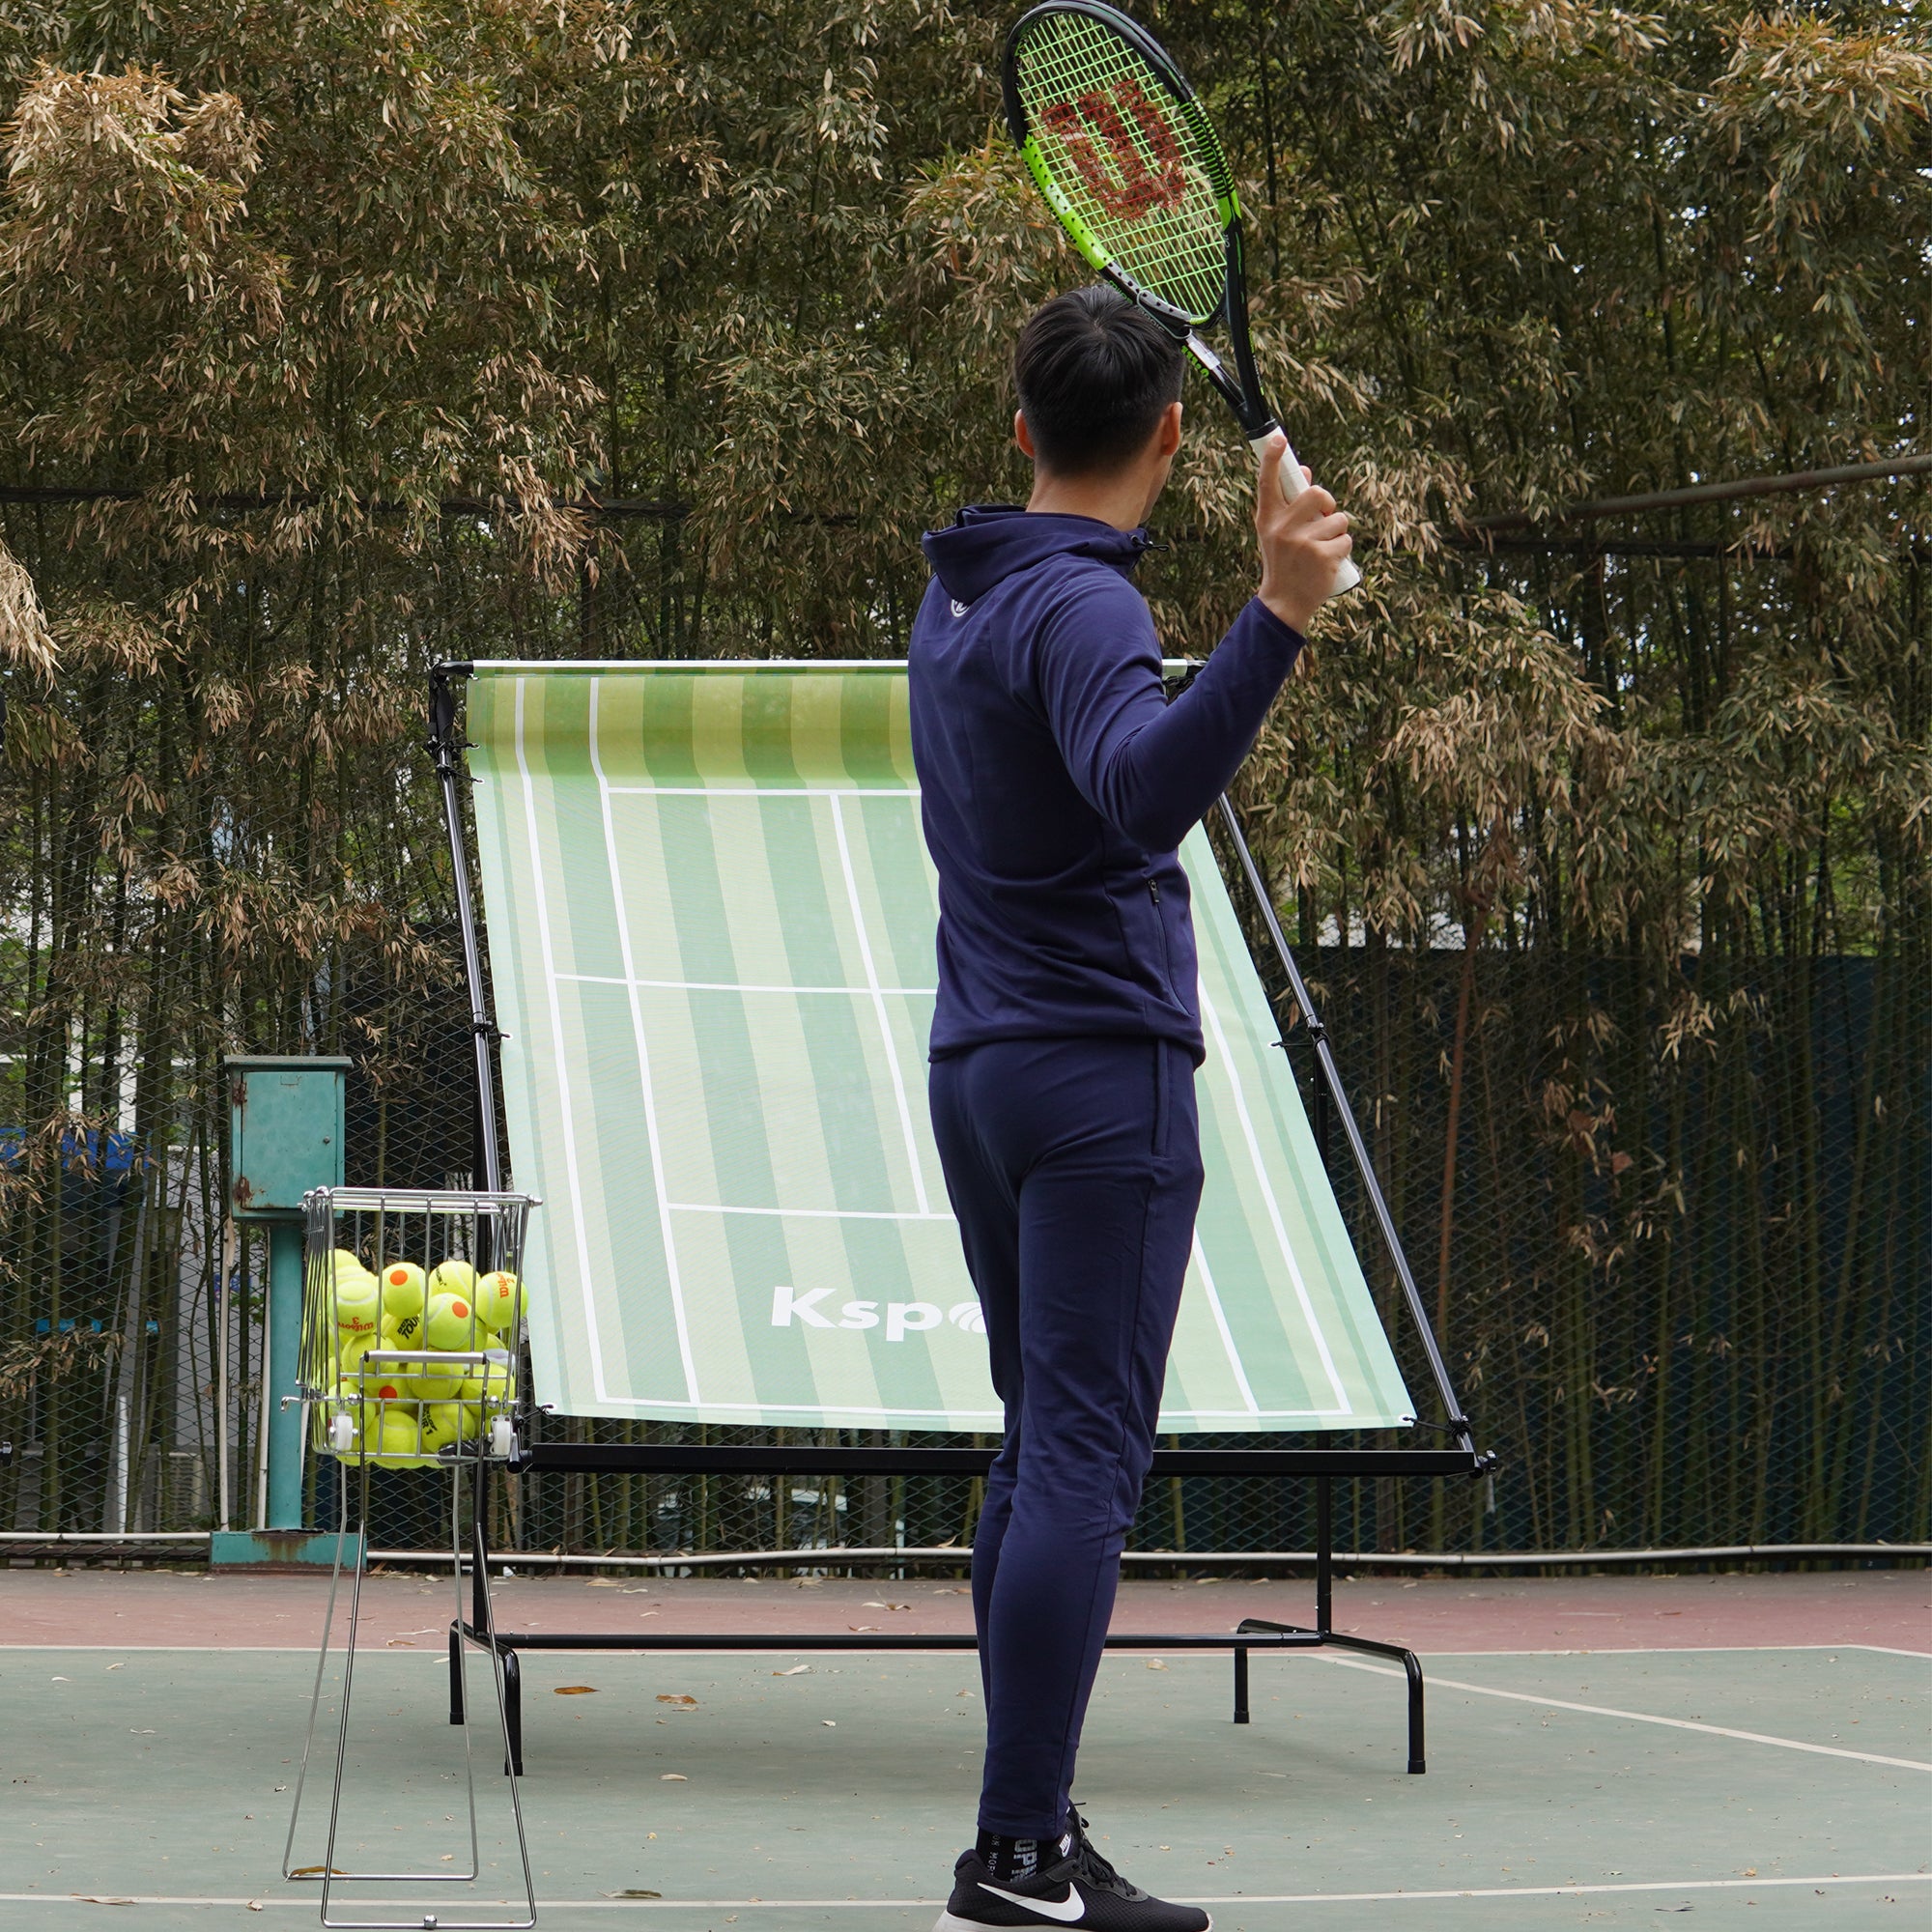 Ksports Tennis Rebounder Net Large Green